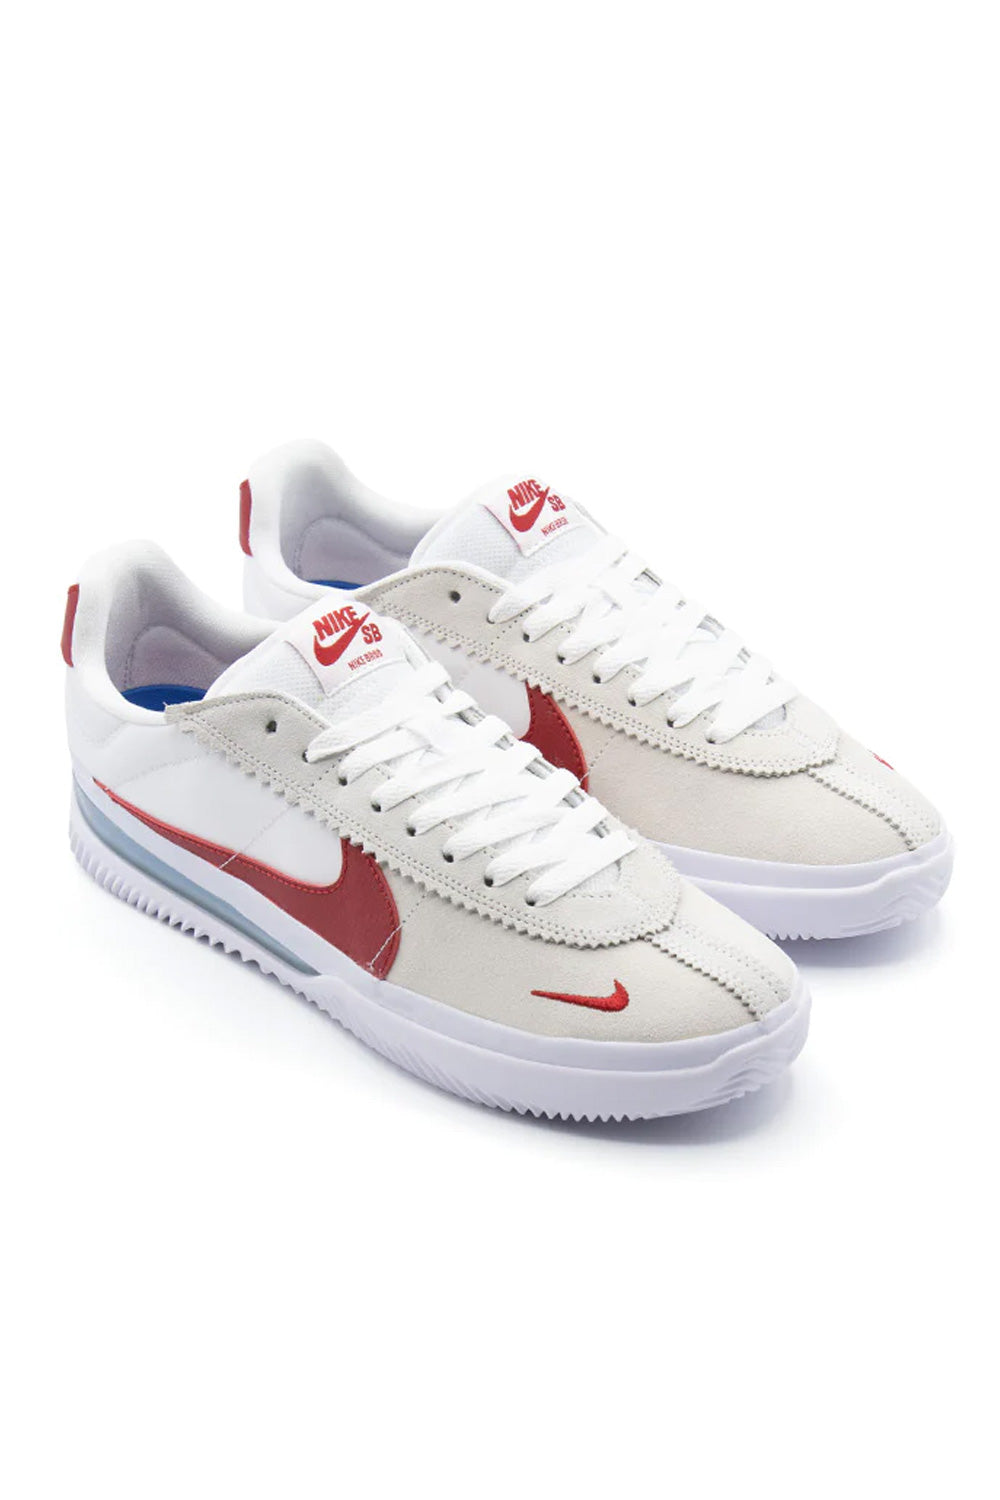 Nike SB BRSB Shoe White / Varsity Red - BONKERS